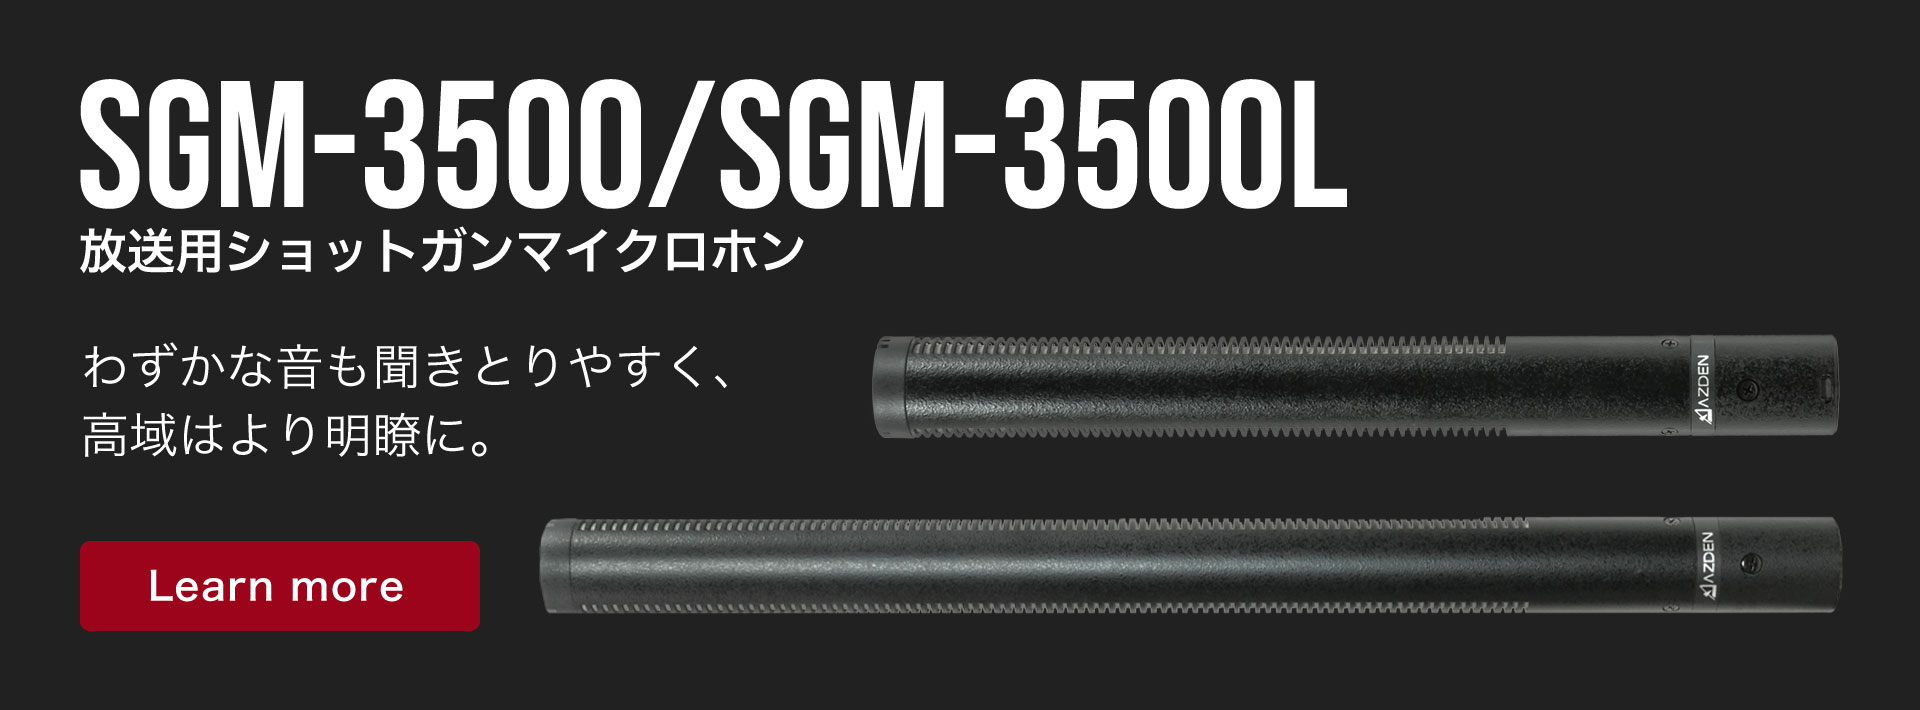 SGM3500_3500L